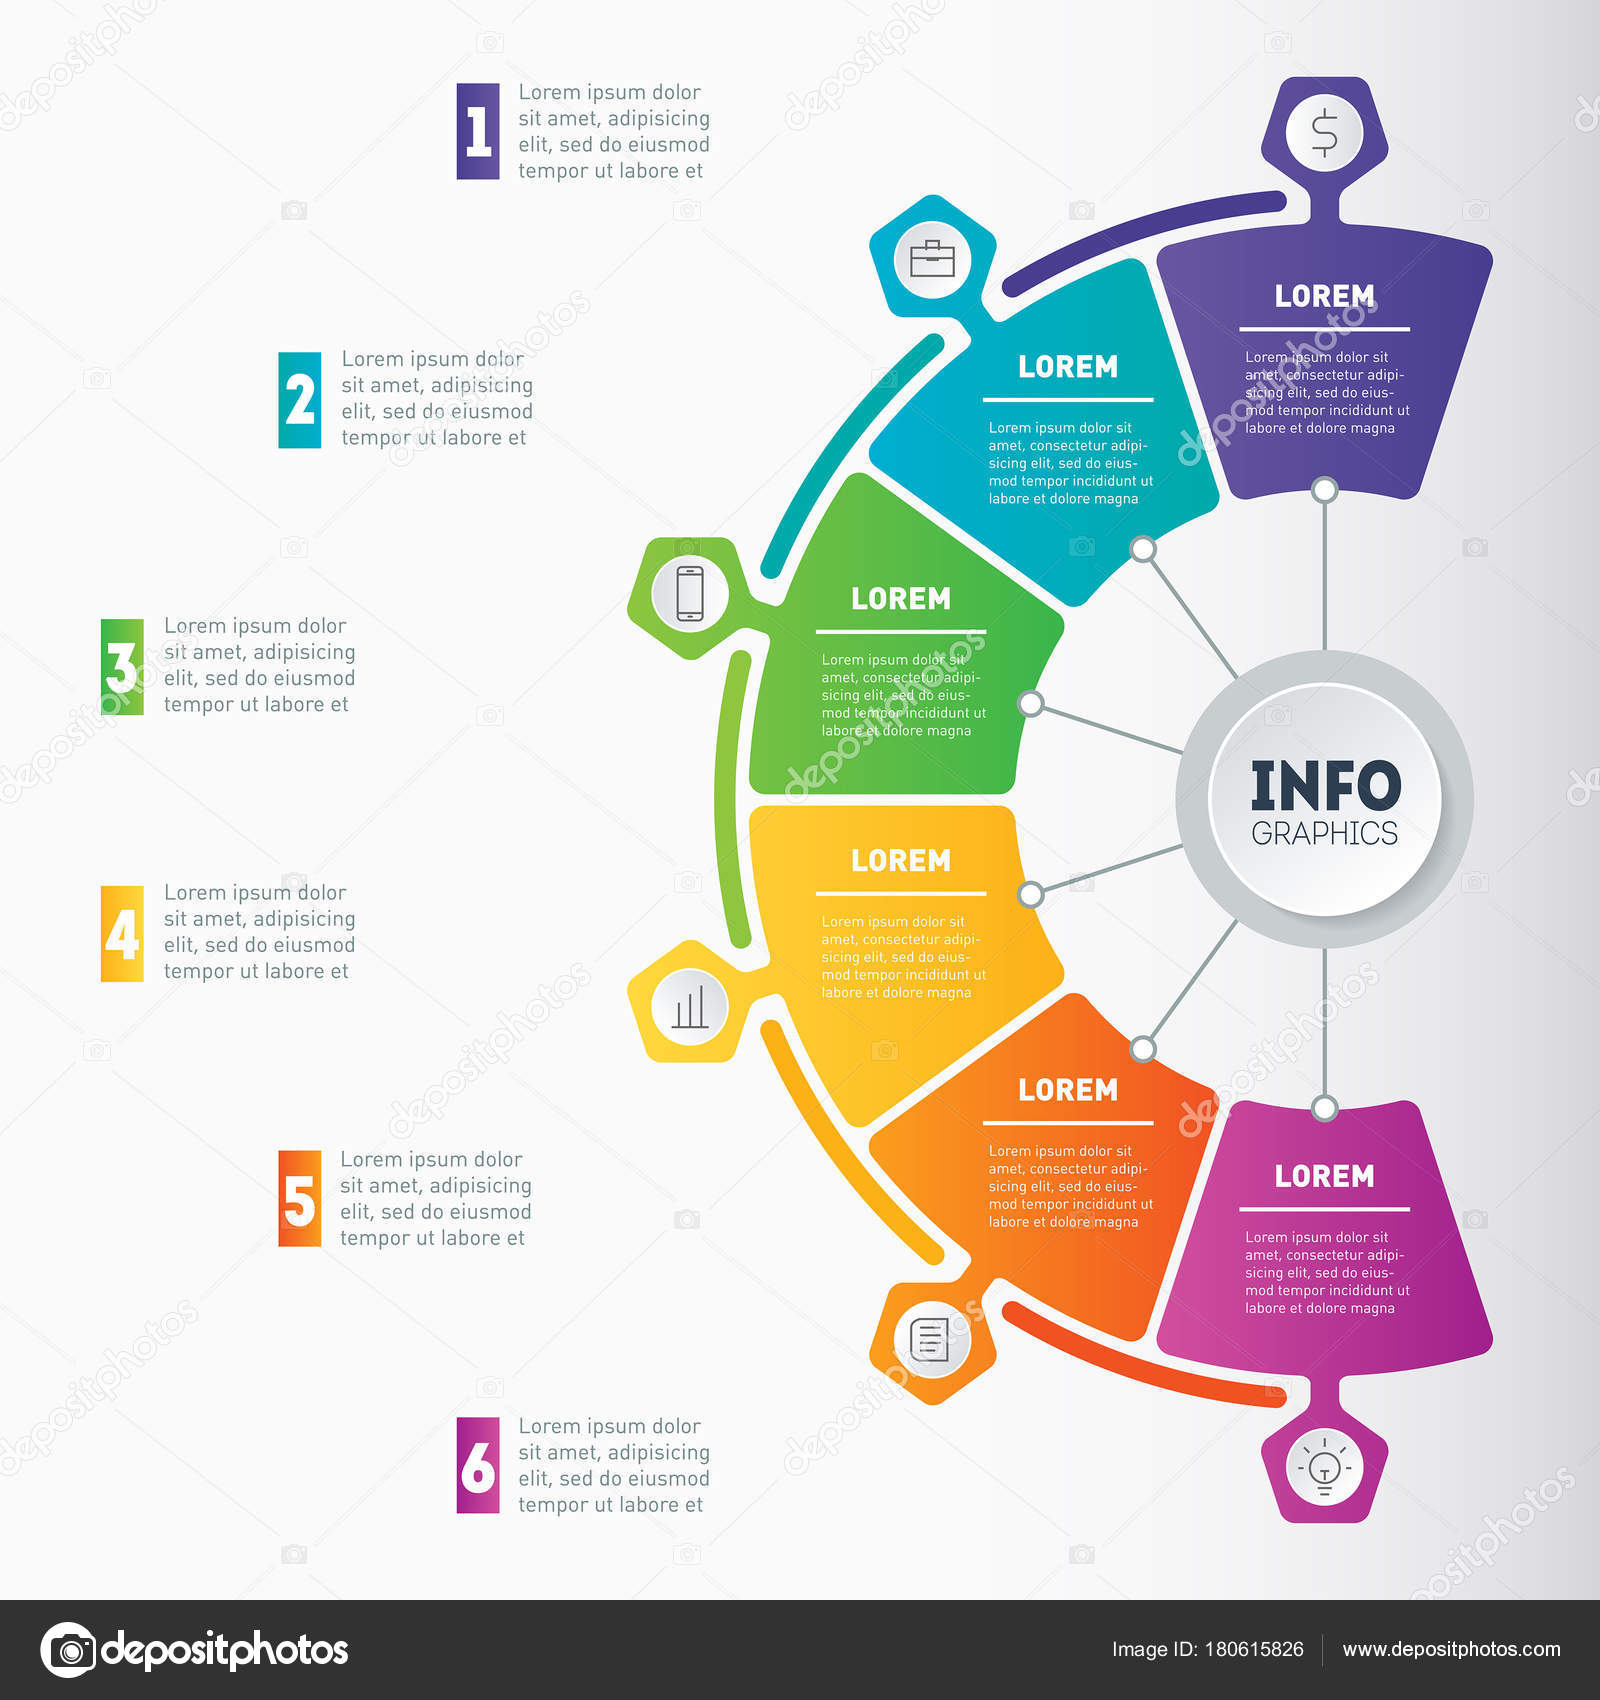 Interactive Infographic in PowerPoint | Presentation Design